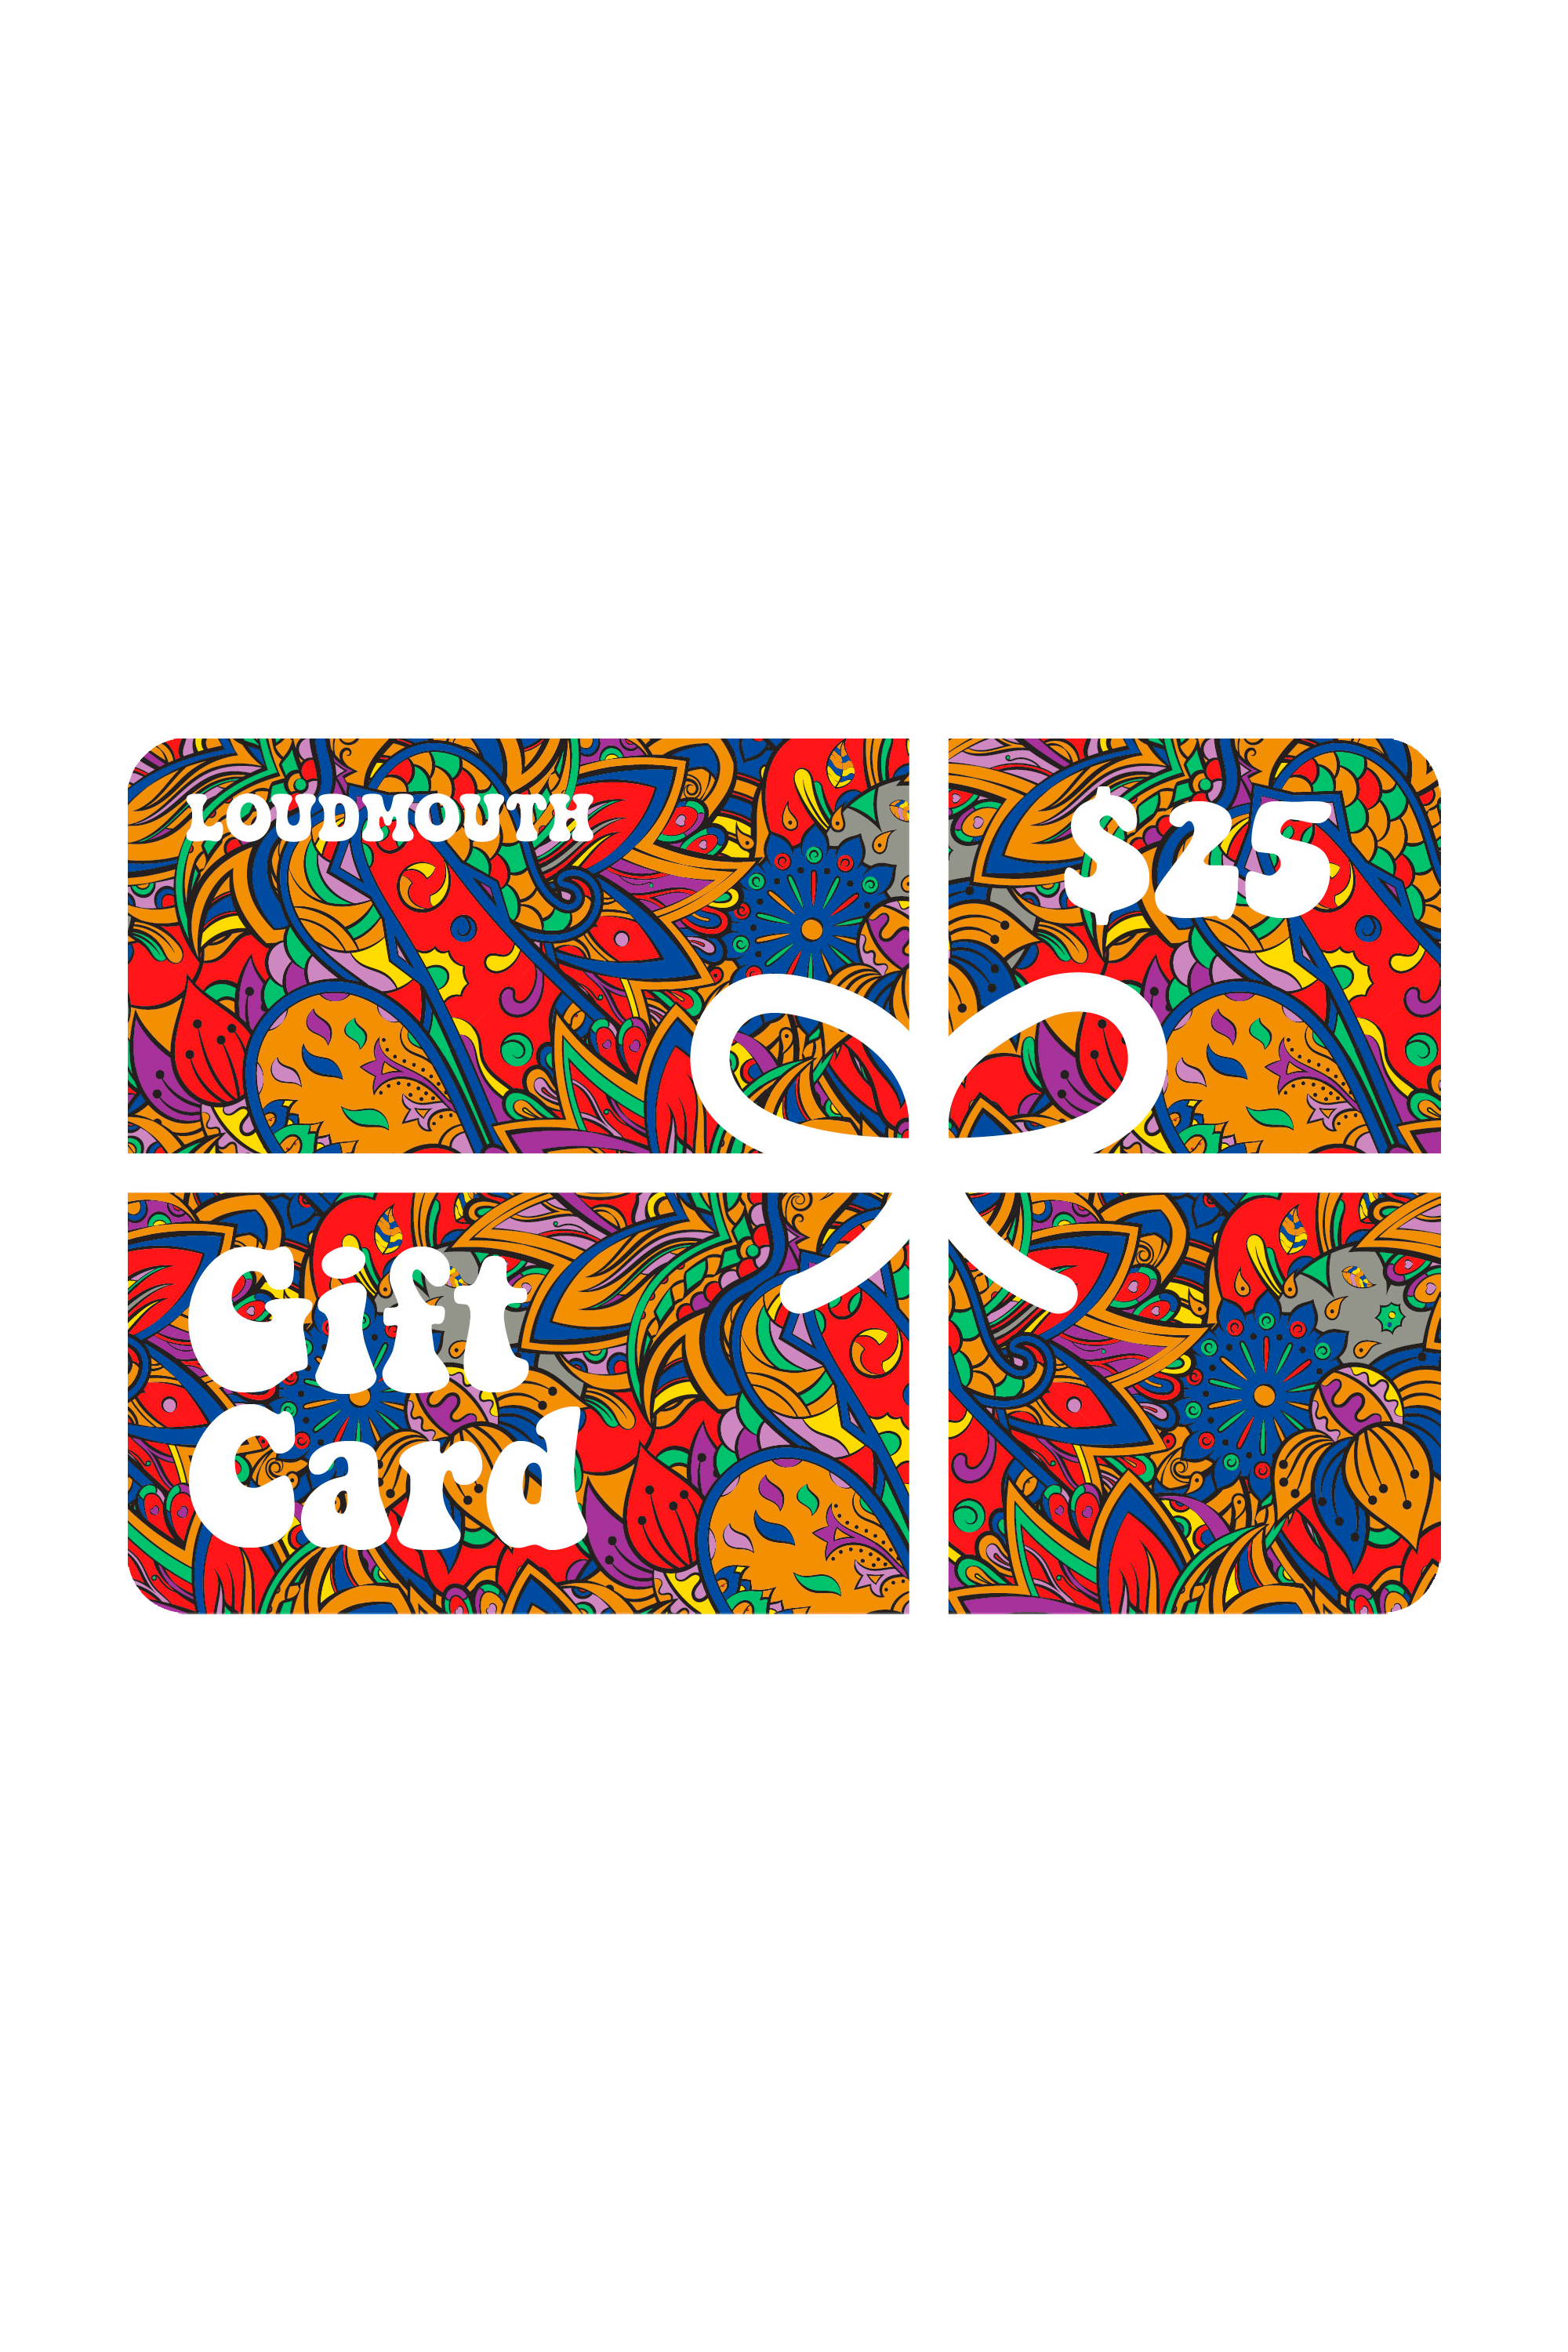 Gift Card - $25.00